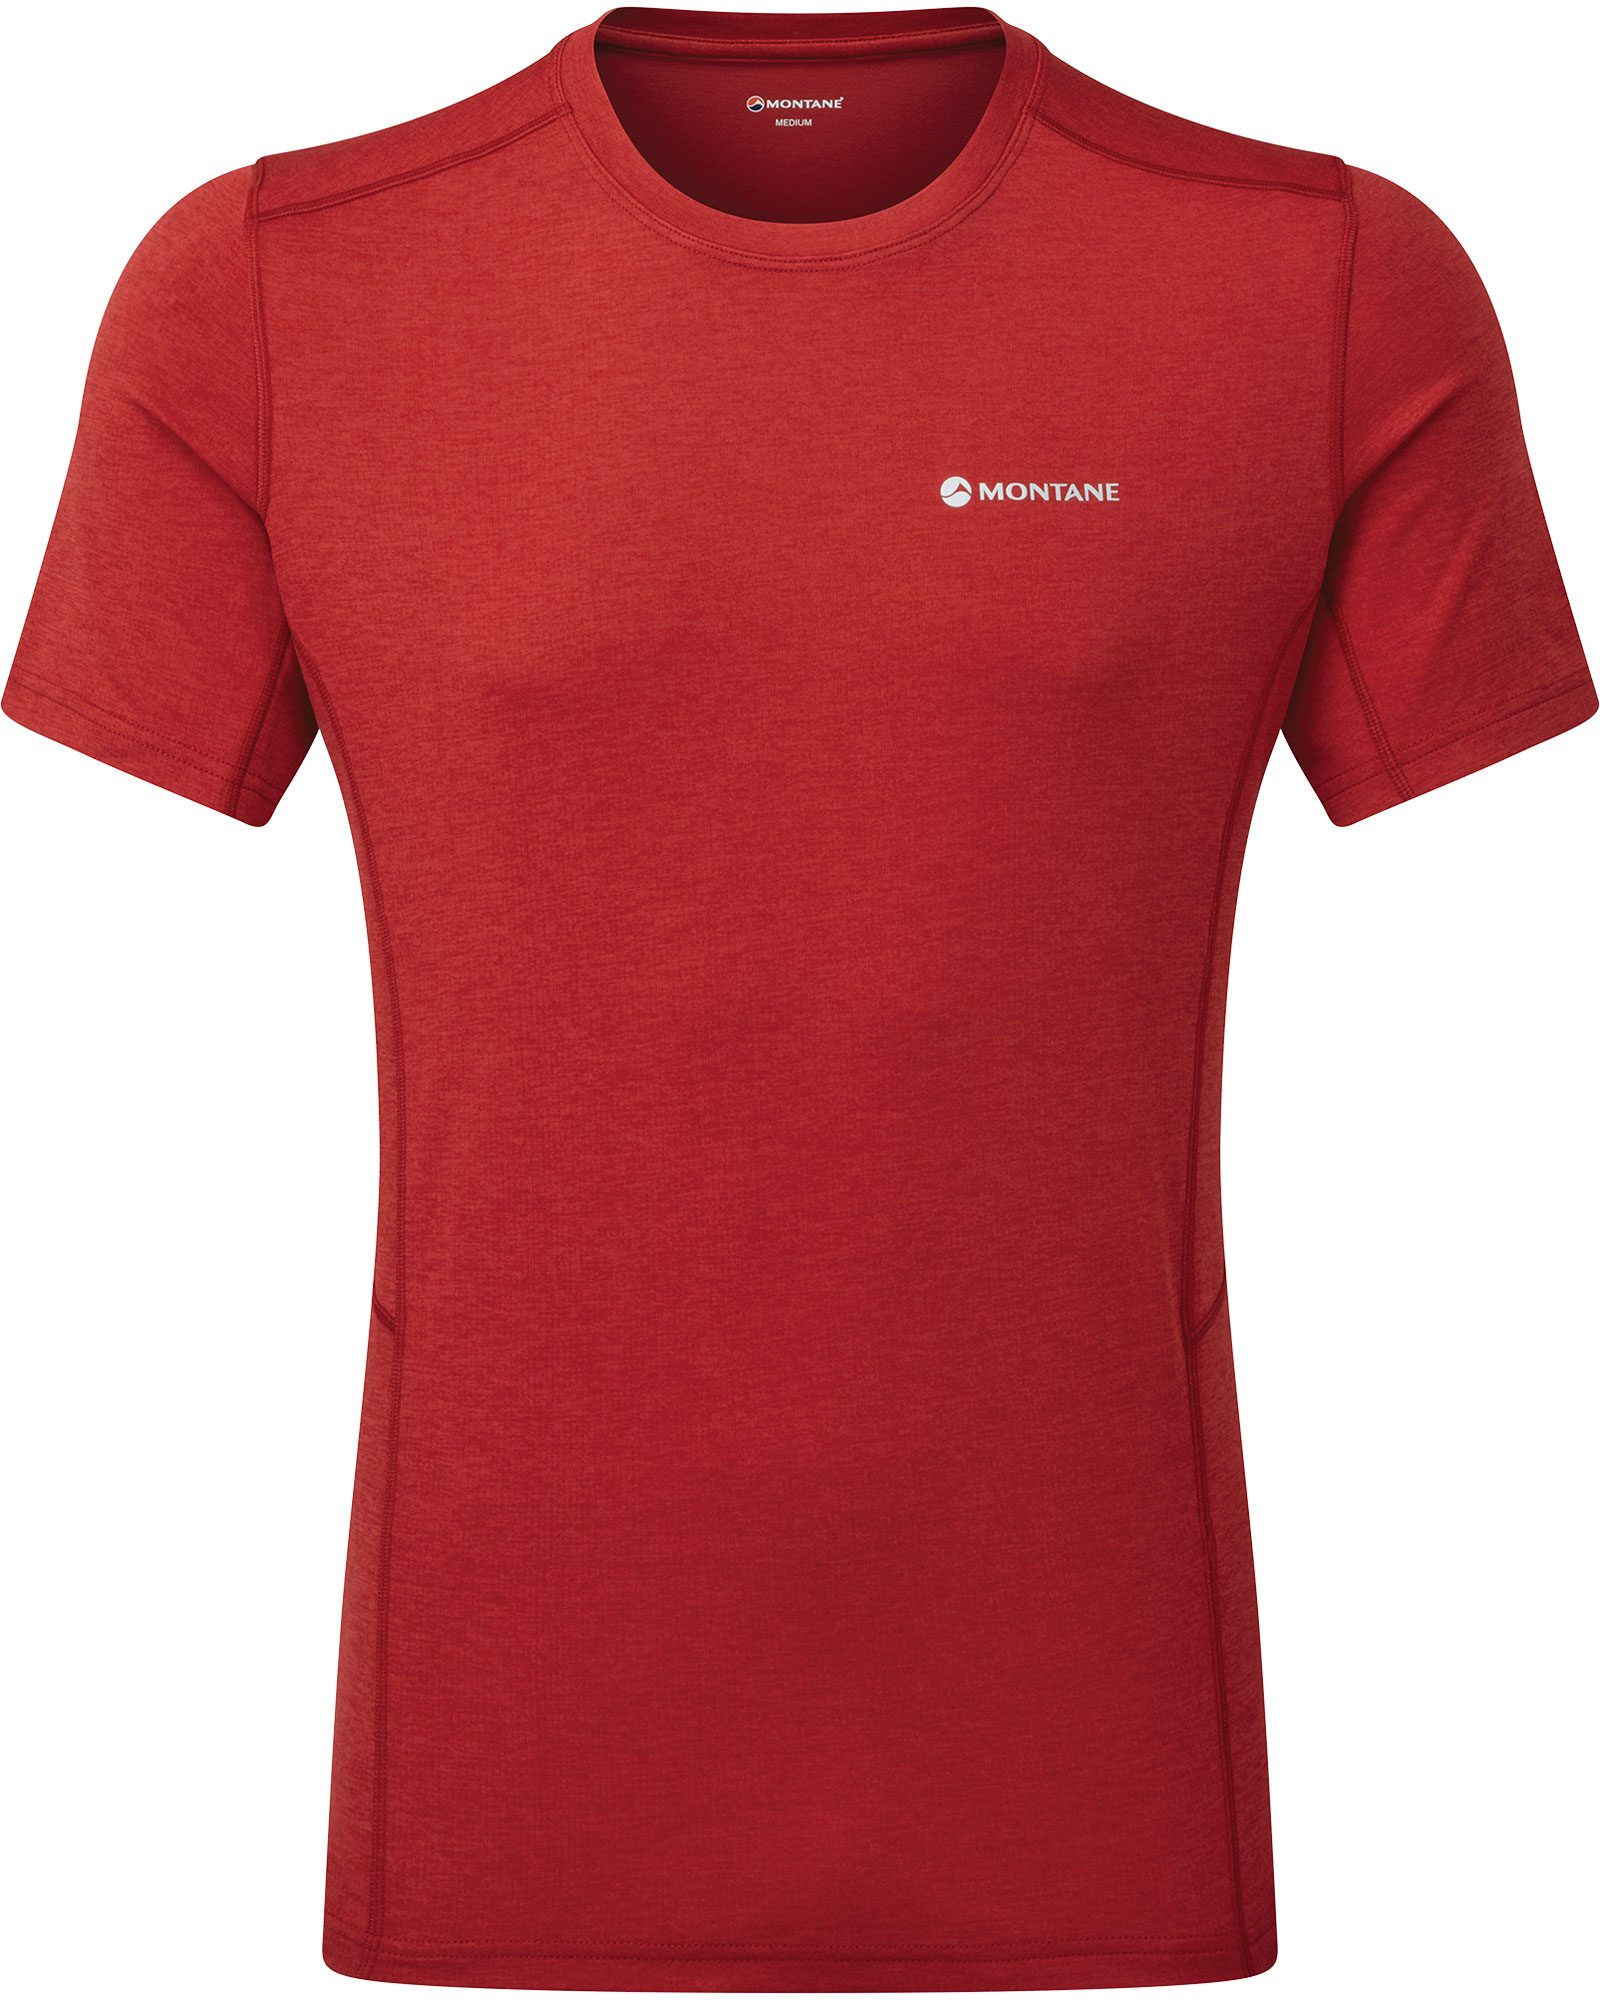 Montane Dart Shorts Sleeve Men’s T Shirt - Acer Red L